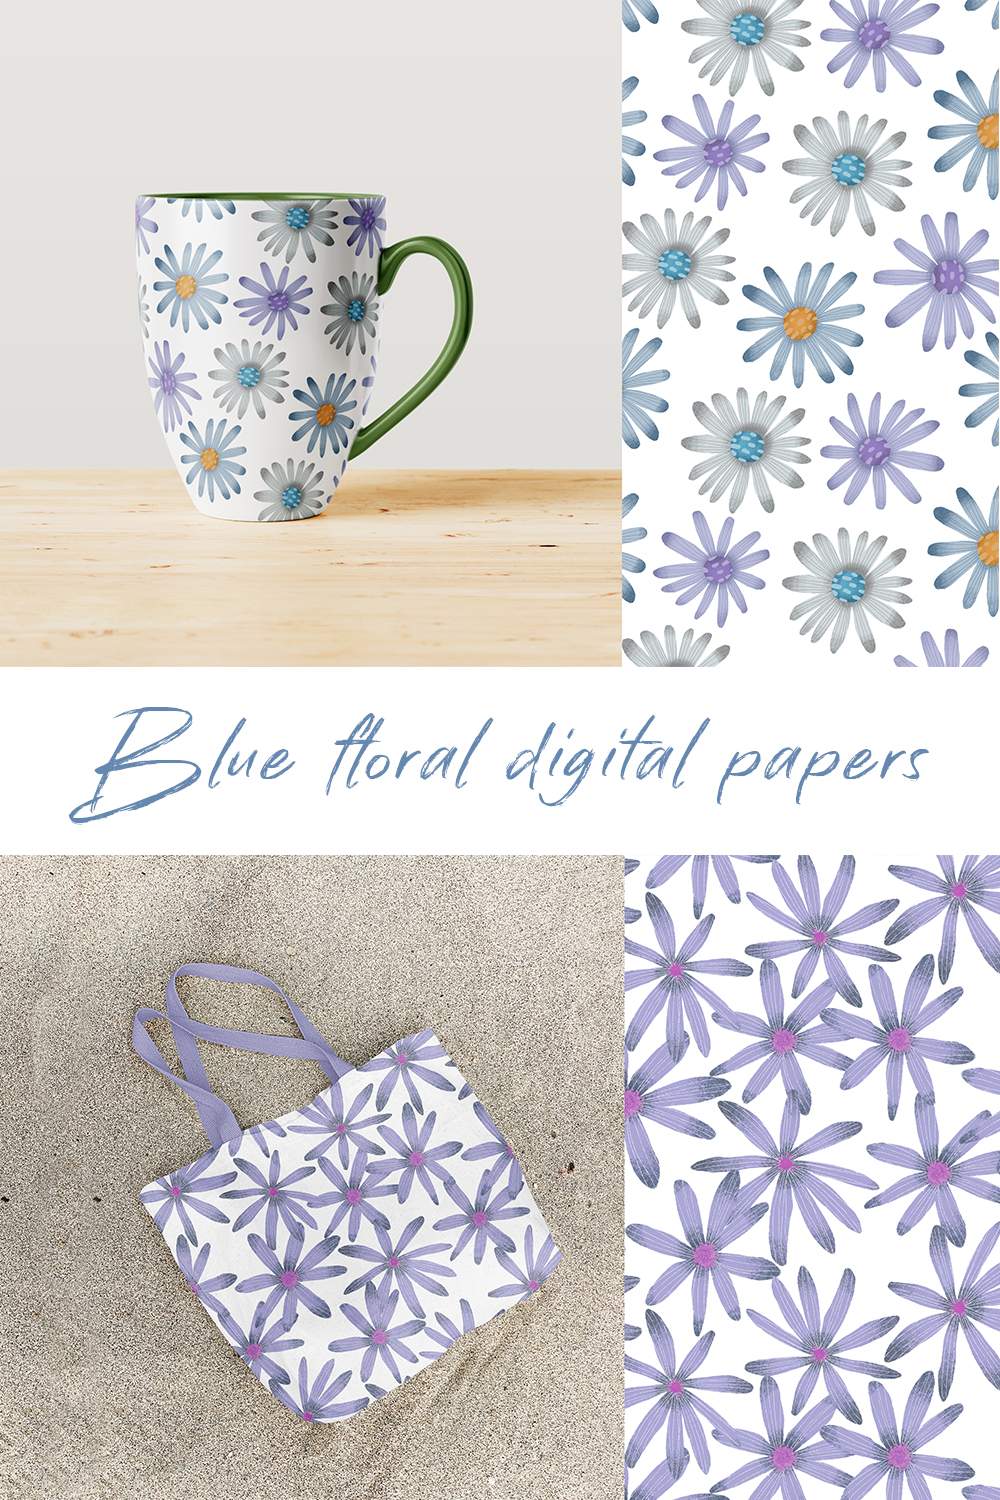 Blue floral digital papers pinterest preview image.